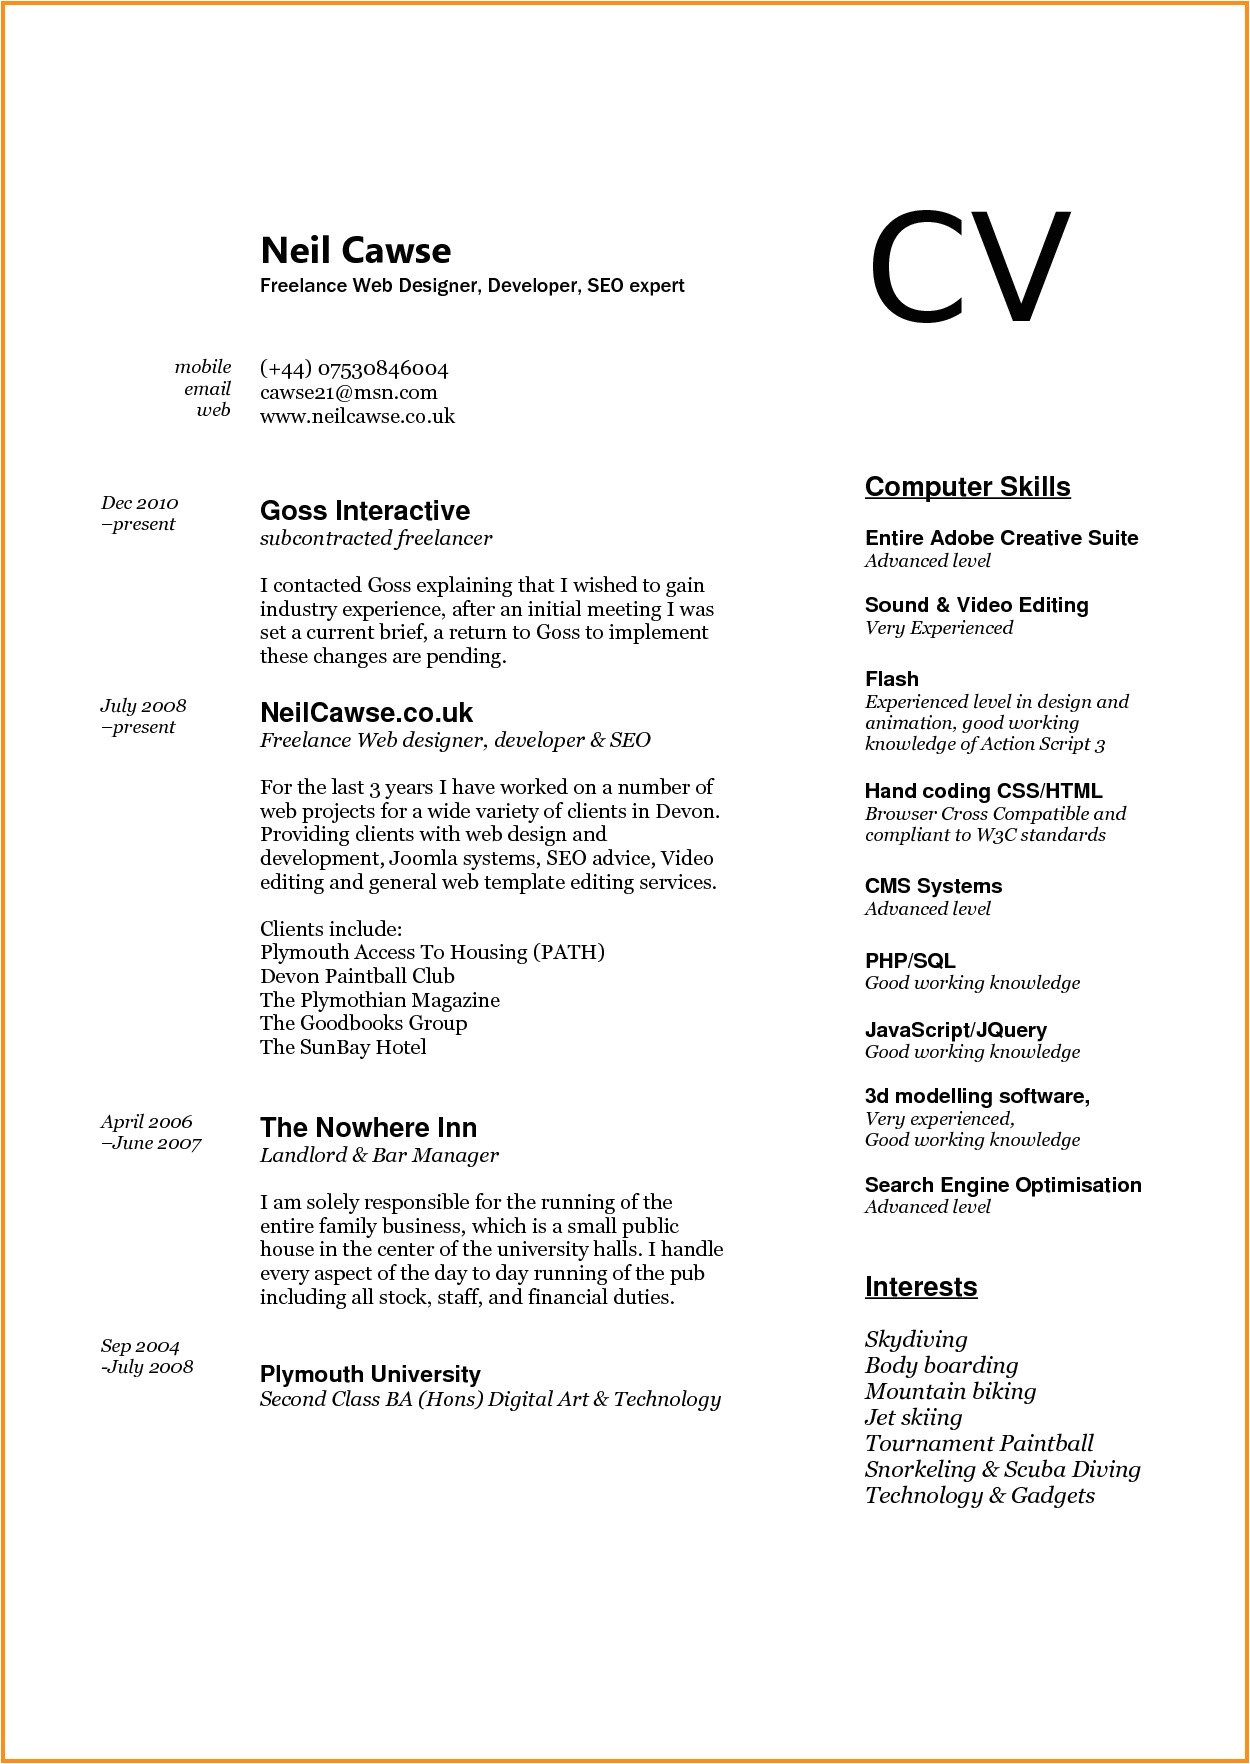 describe your computer skills resume sample 6 describe your puter skills resume sample 2